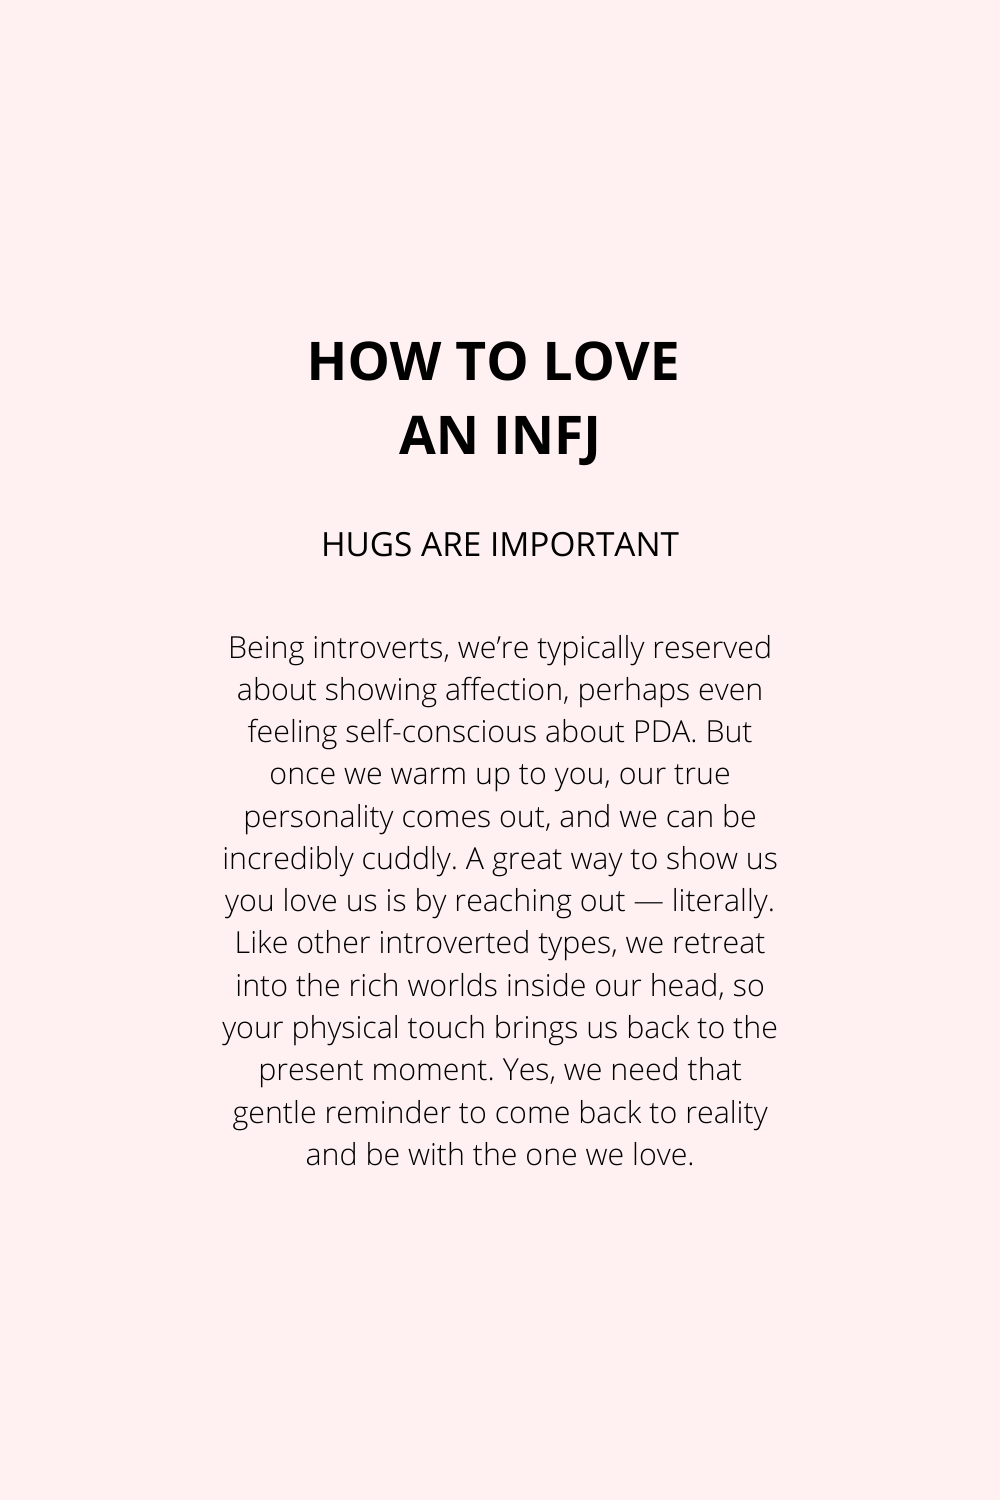 Instructions on Loving an INFJ